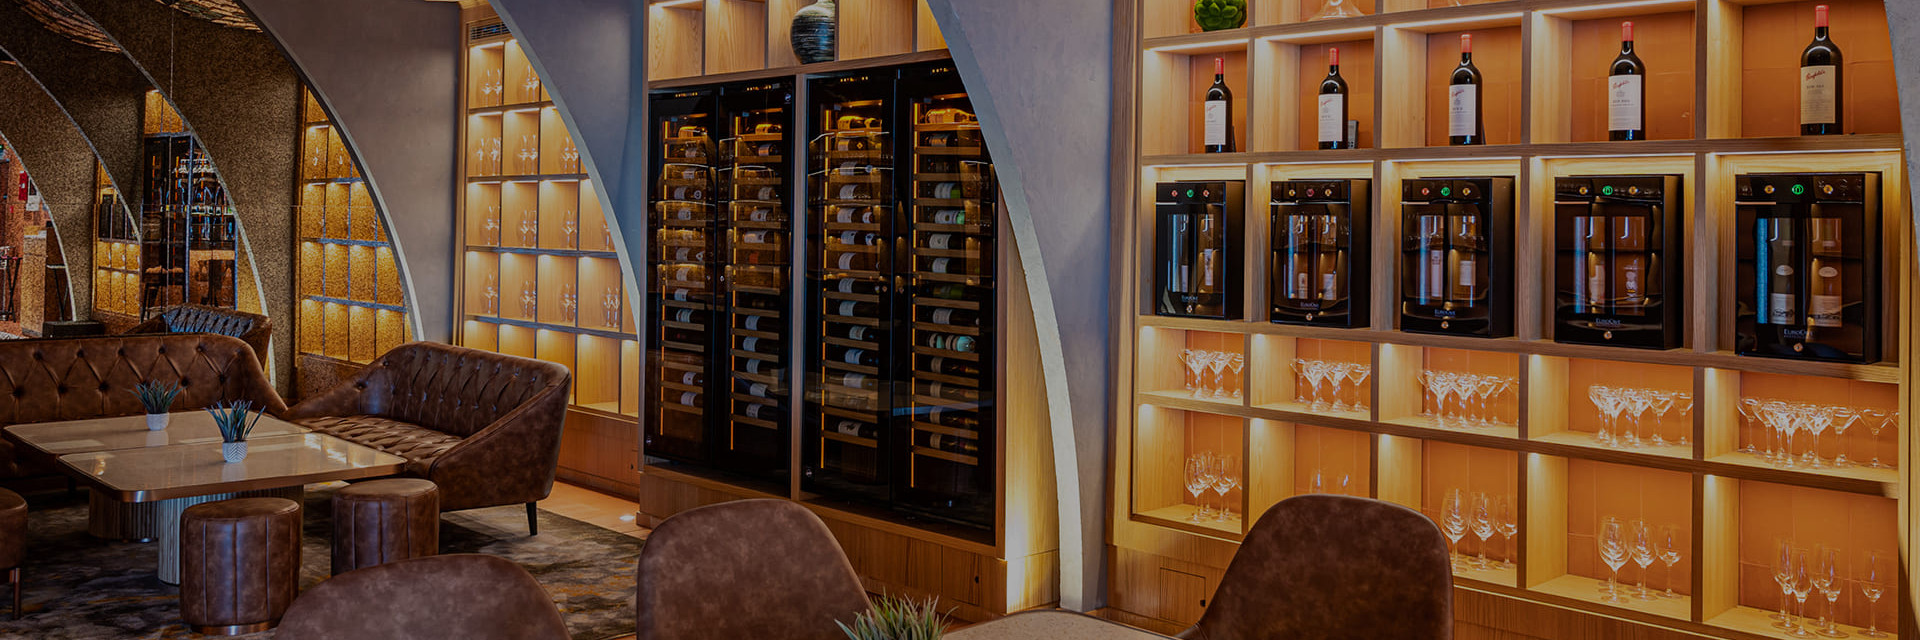 Wine cabinets and wine bars installation in PAPA restaurant in Dubaï.